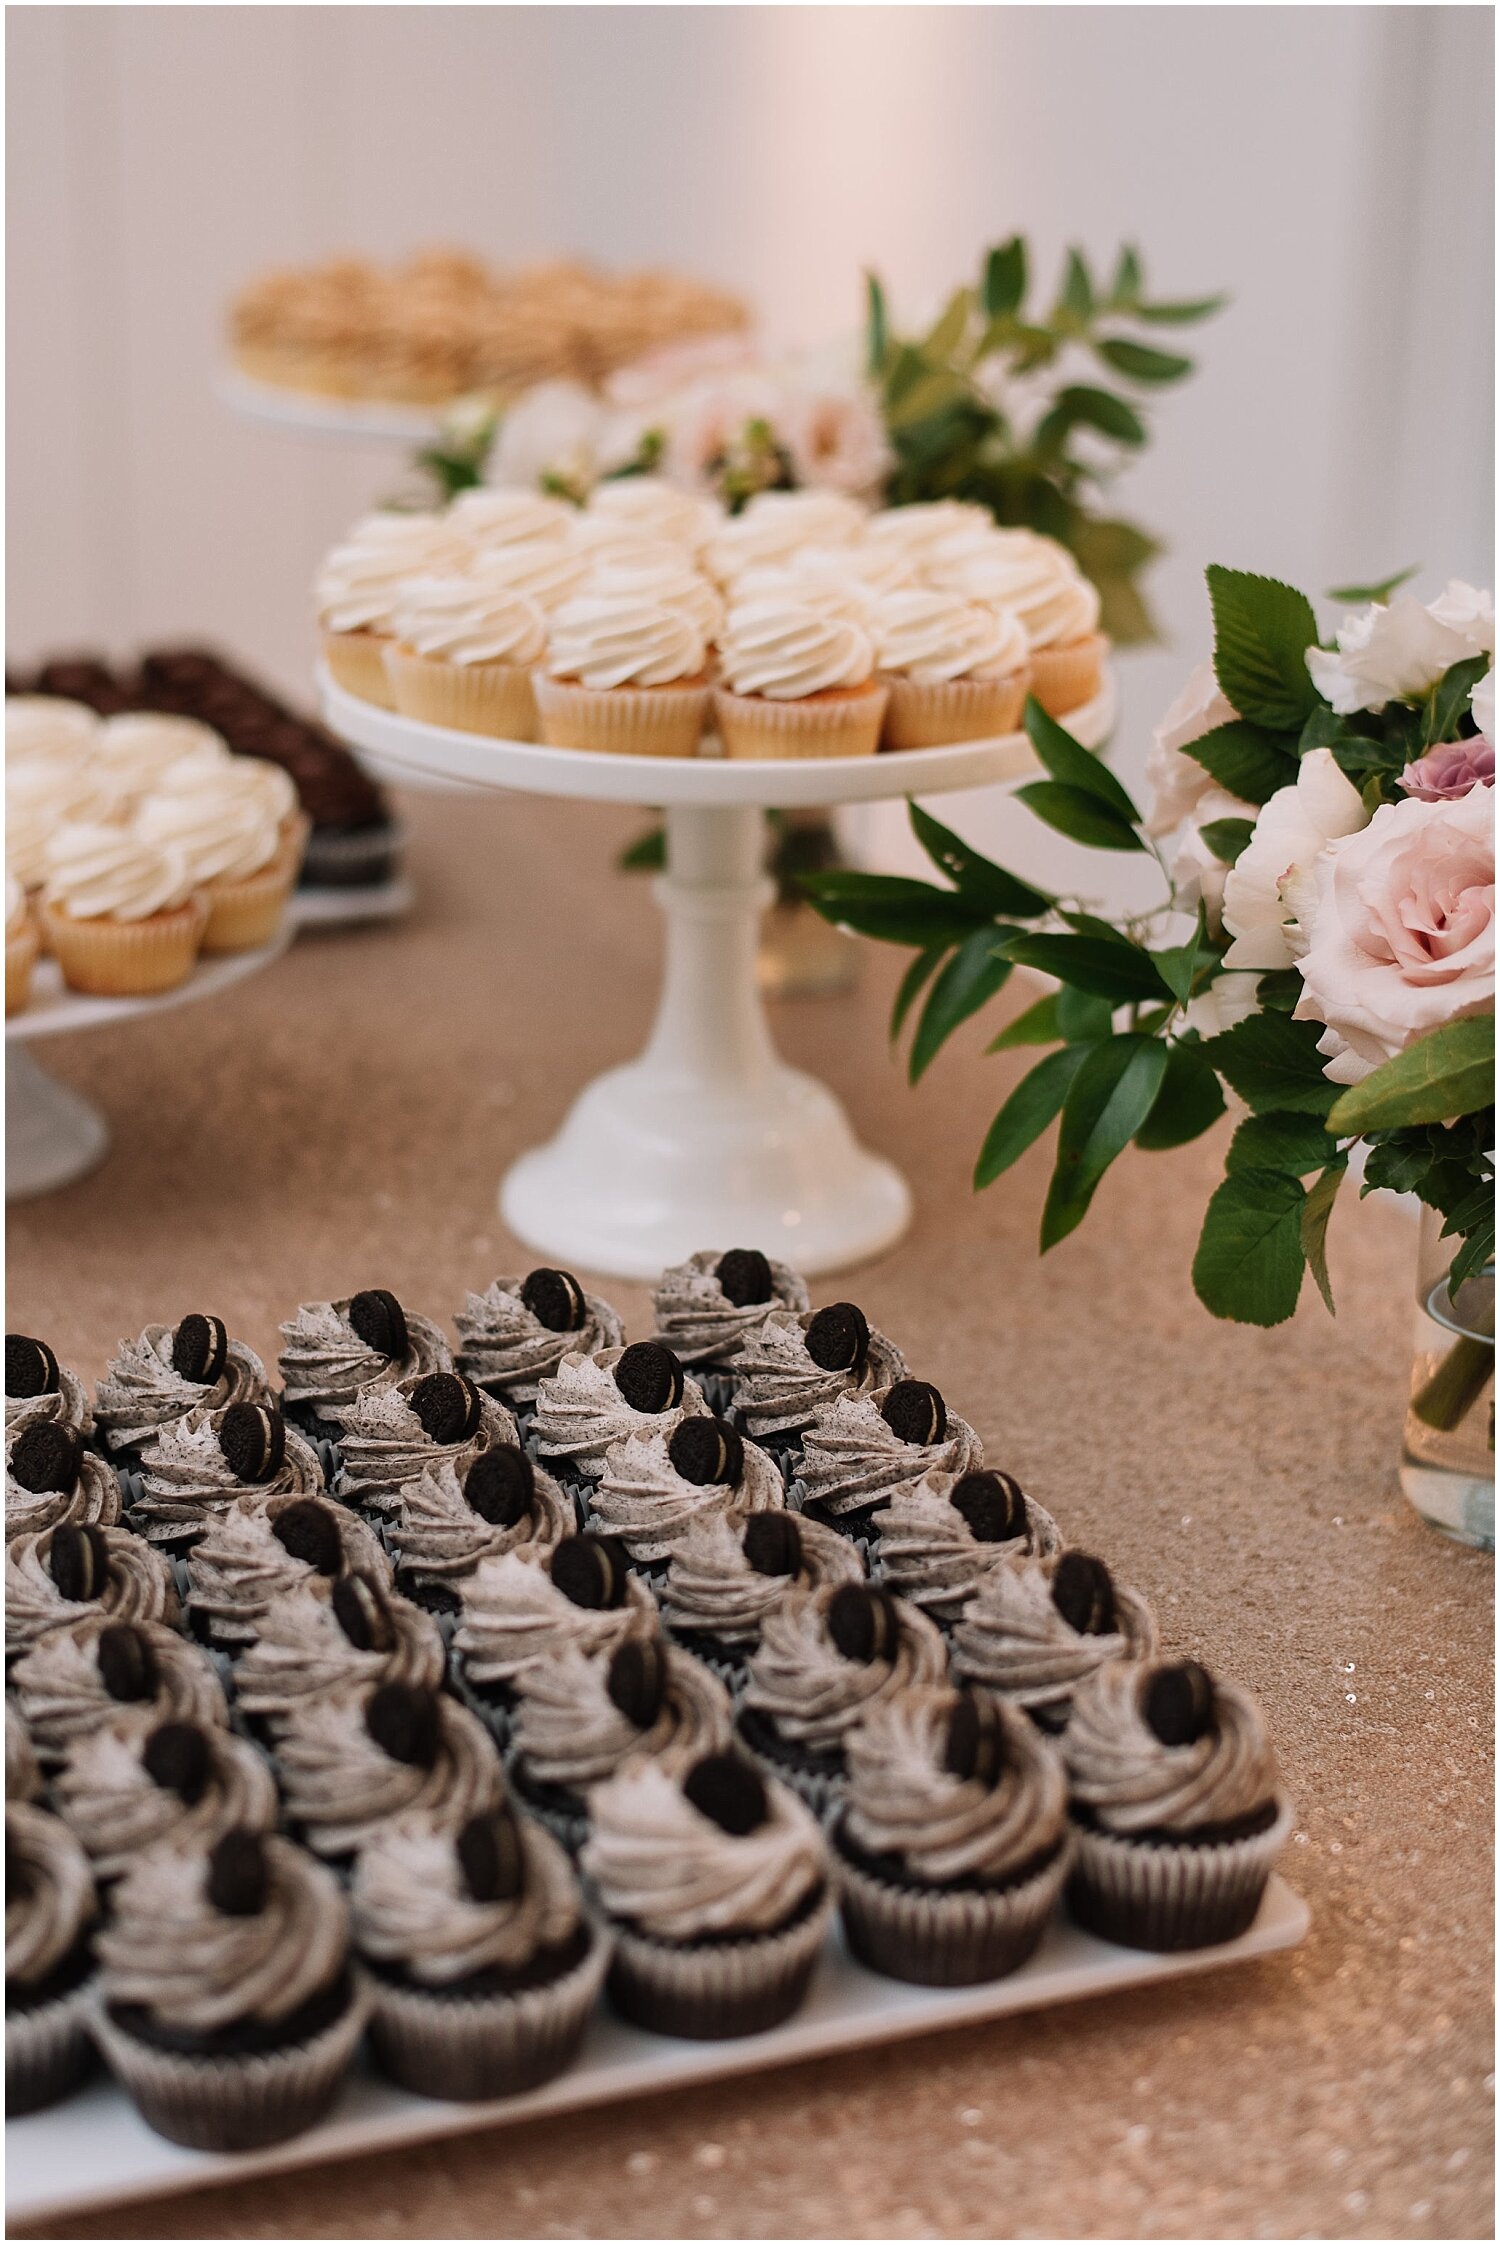  cupcakes dessert table display 